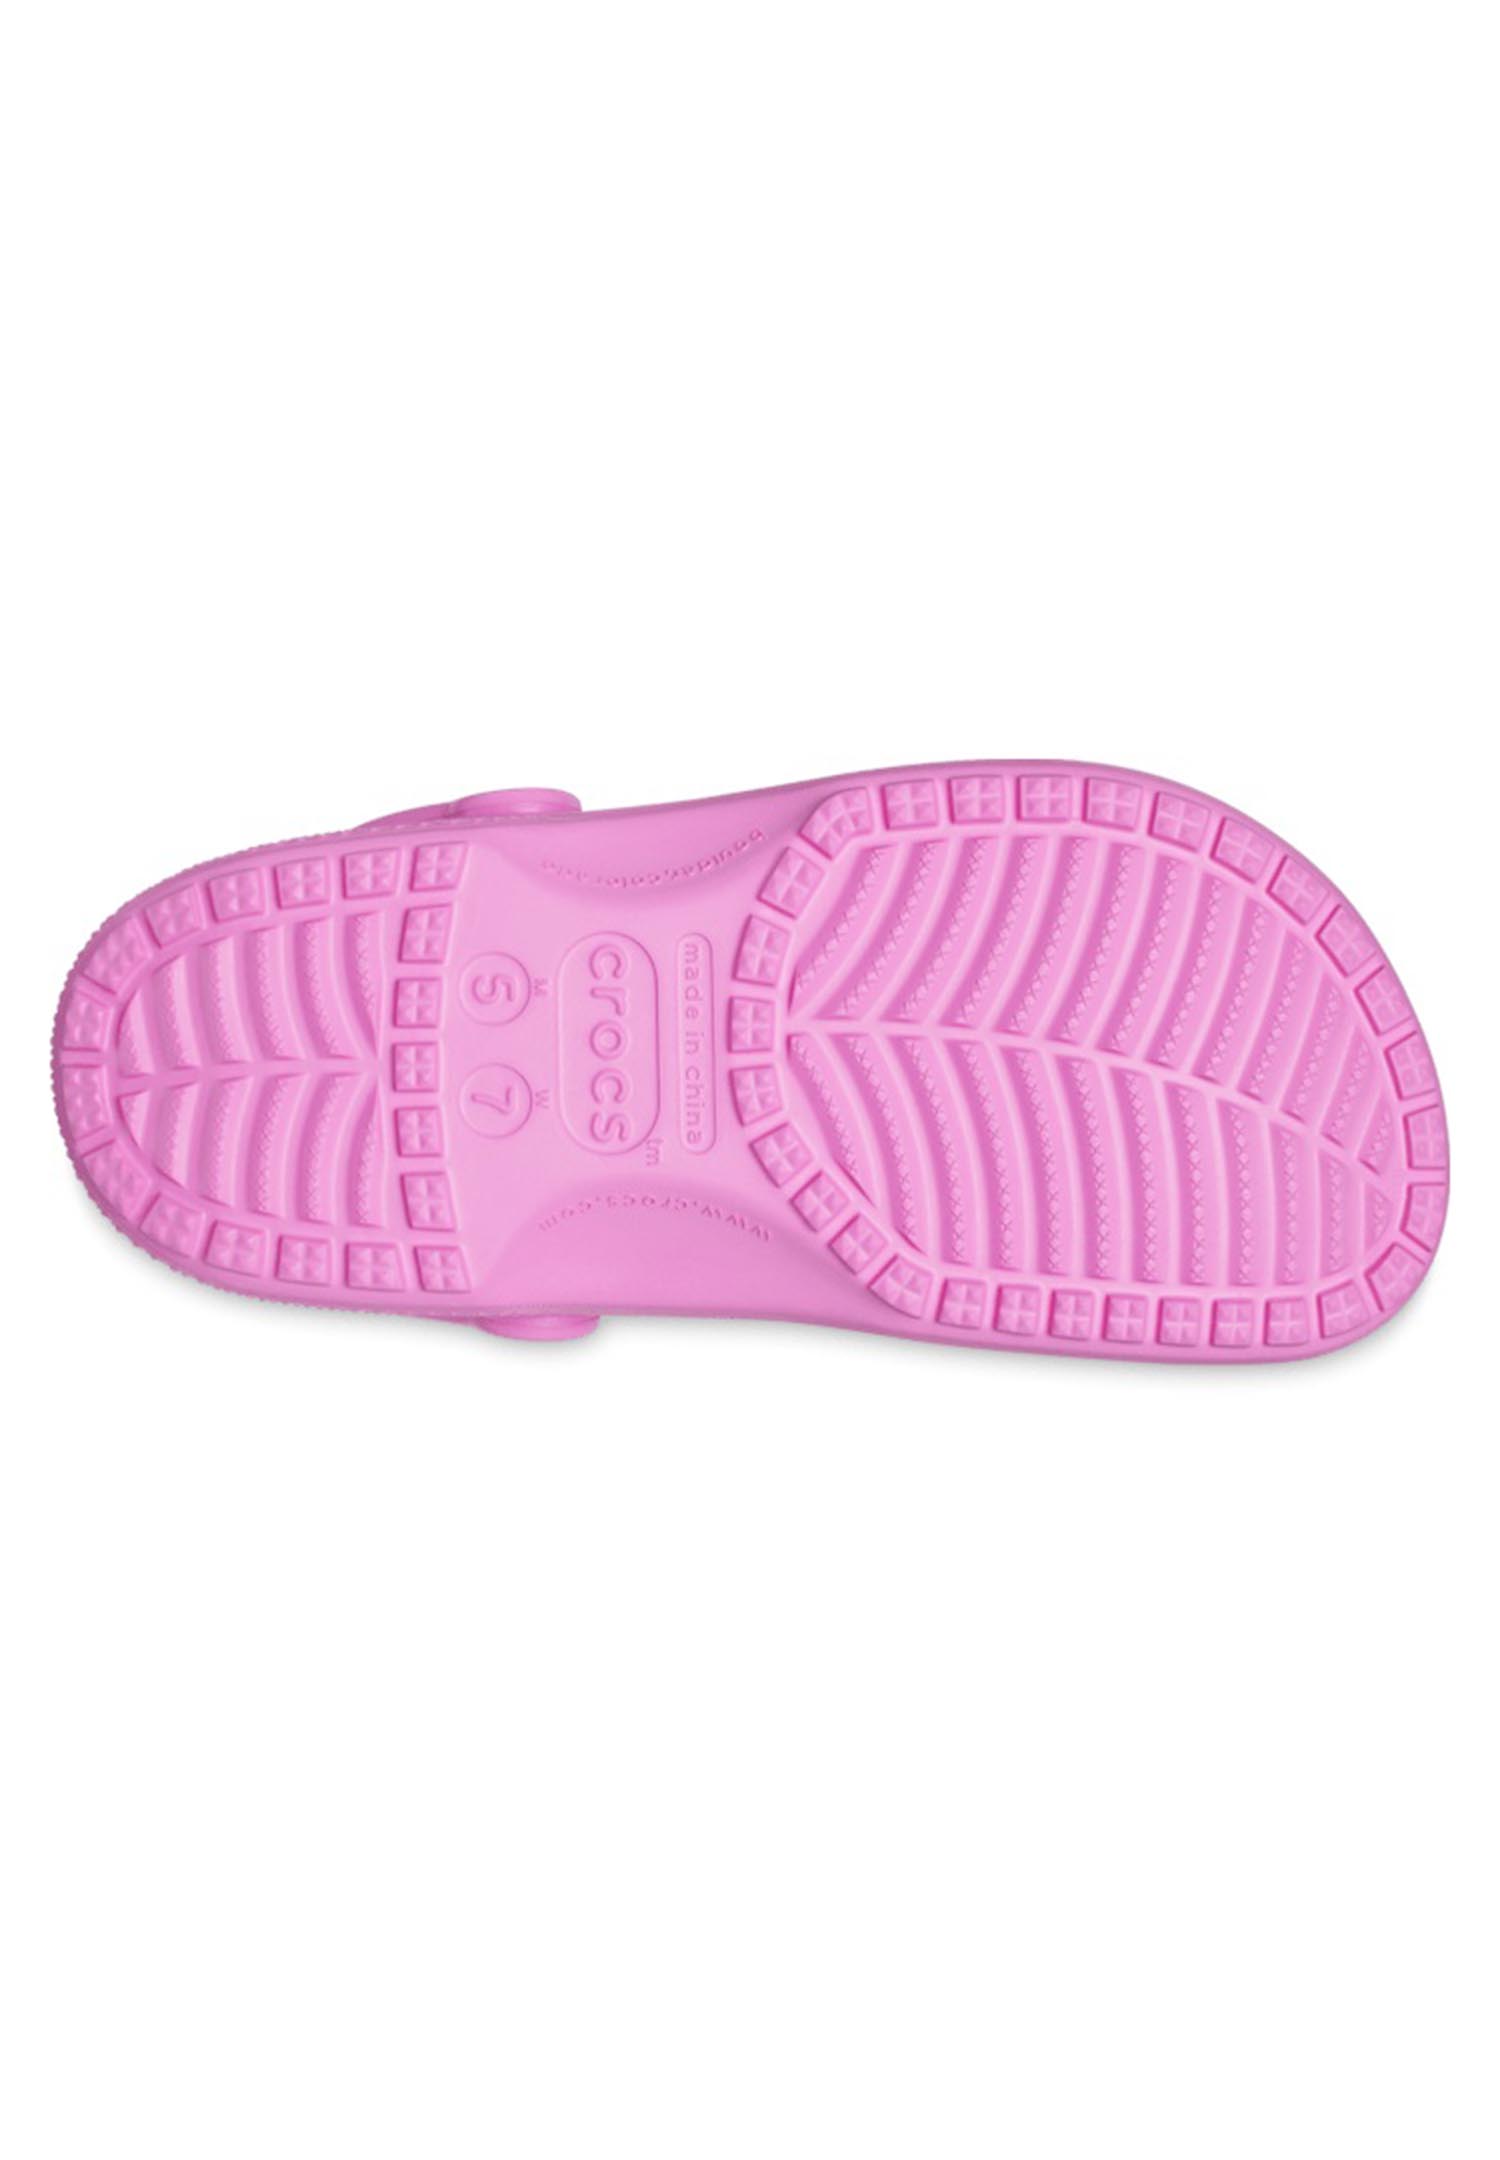 Crocs Classic Clog Unisex Erwachsene 10001 6SW pink